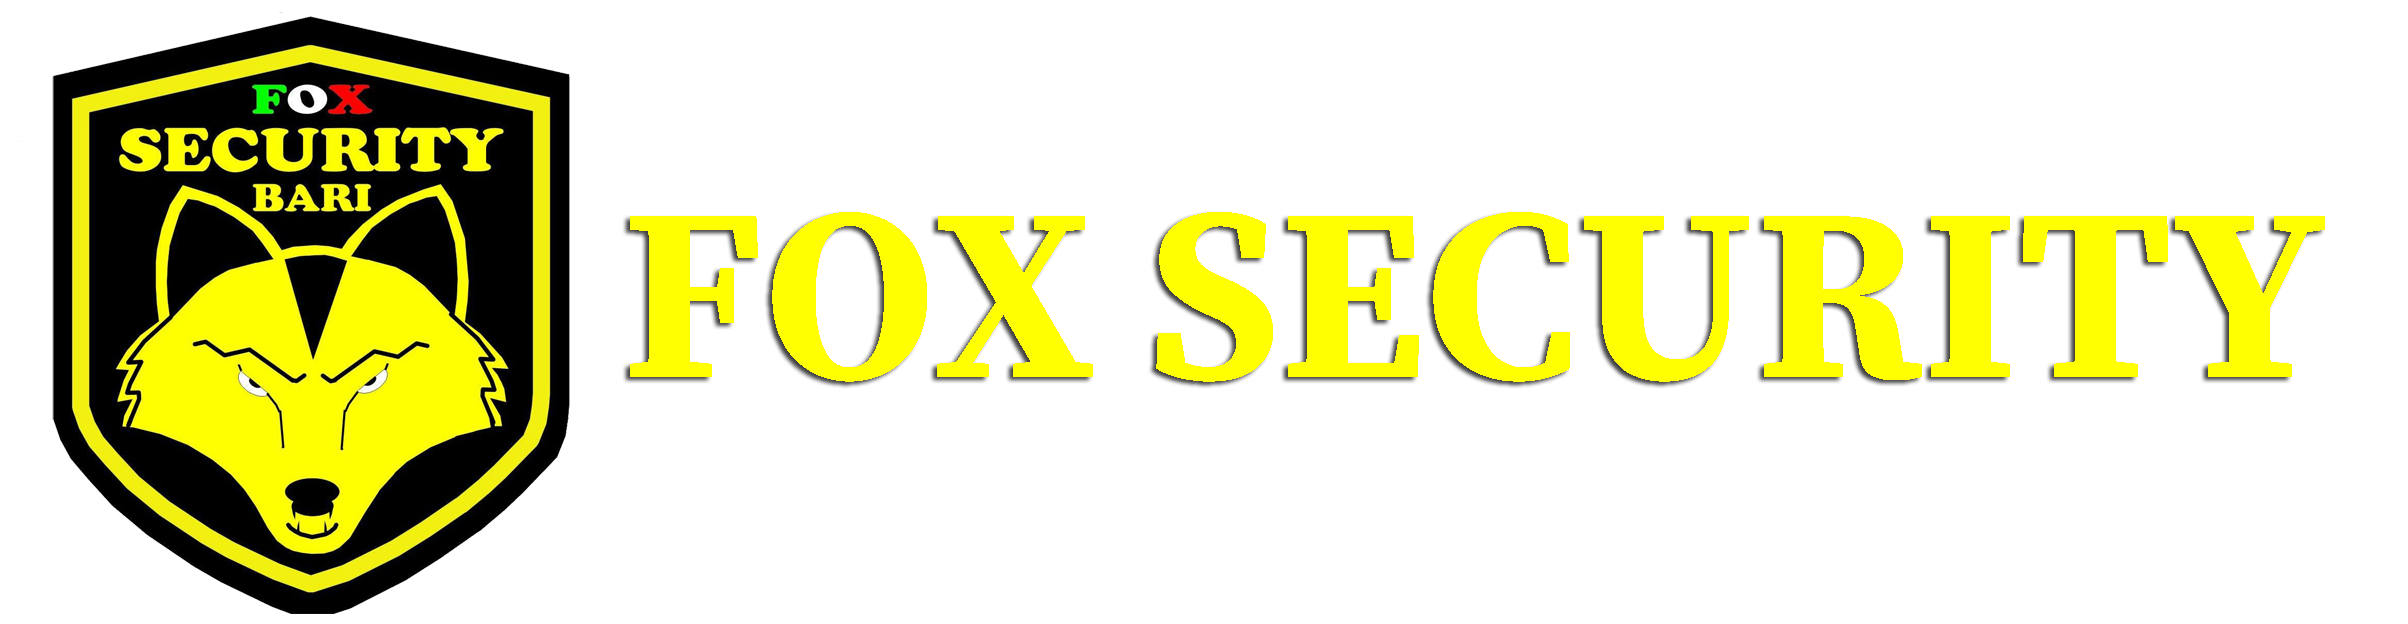 Fox Security srls